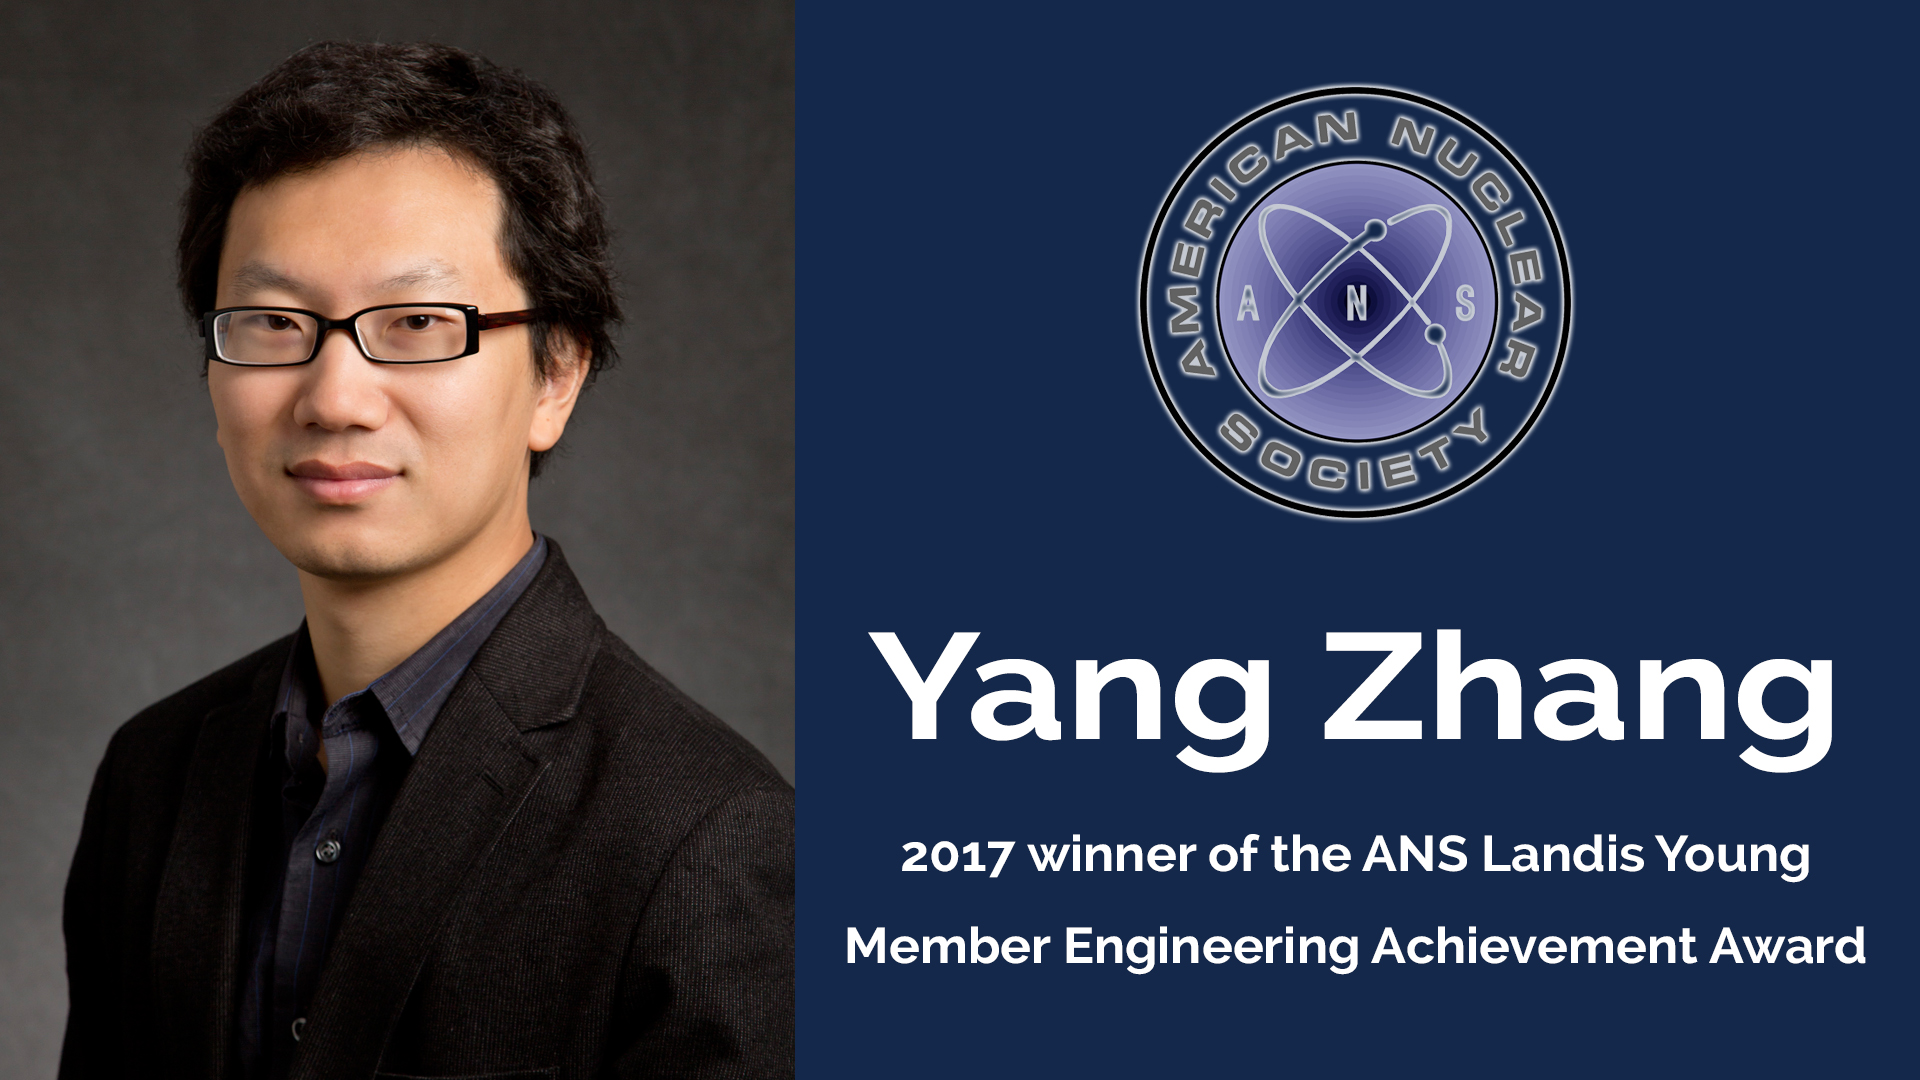 Yang Zhang gains ANS Landis Young Member Engineering Achievement Award